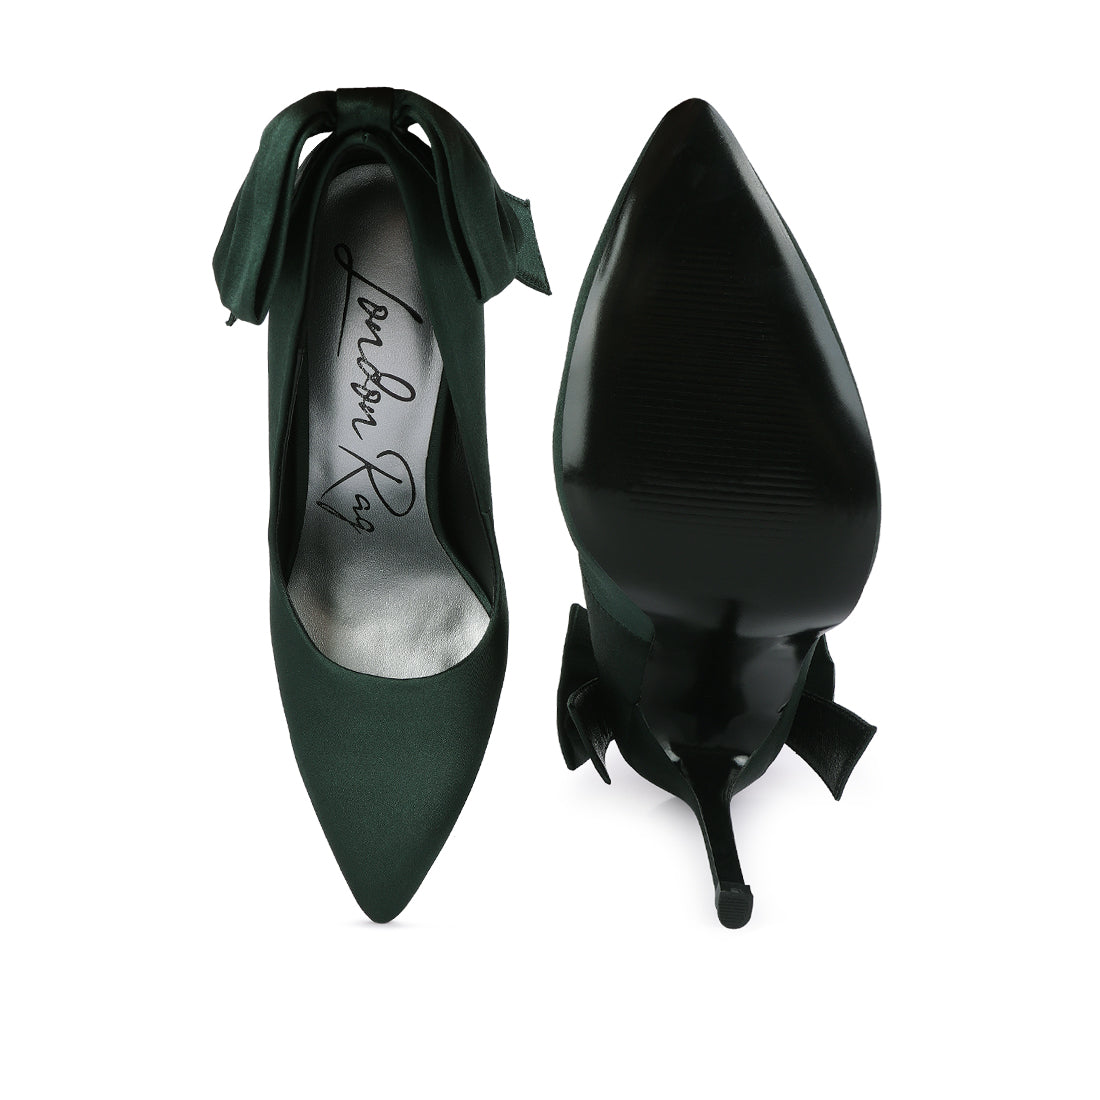 high heeled pump sandals#color_green